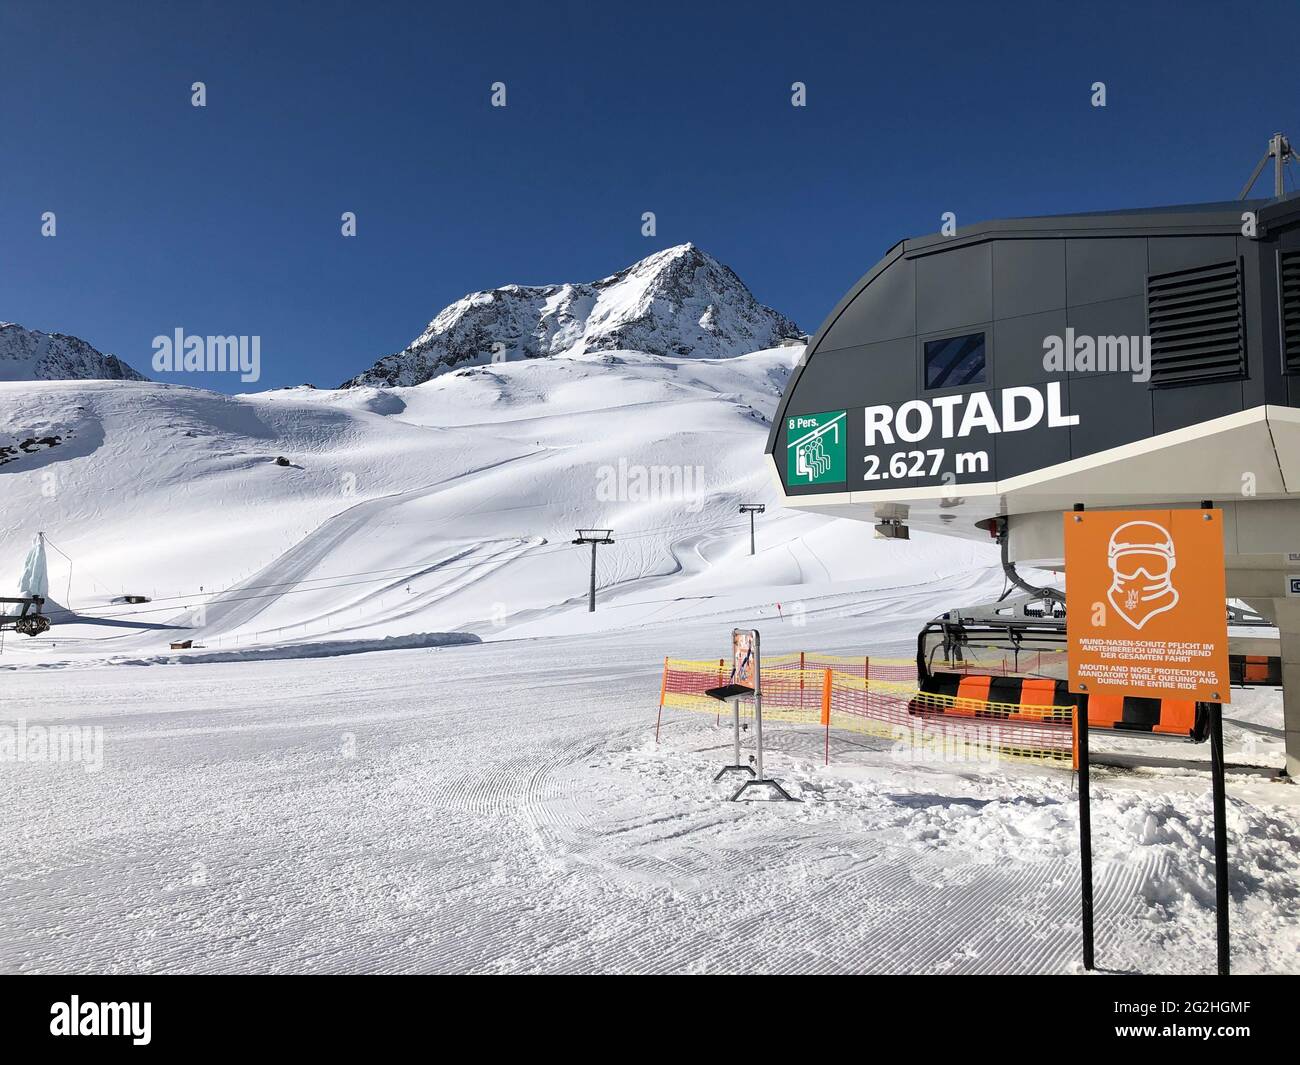 Stubai Glacier ski area, Rotadl 8-seater chairlift, sign mouth and nose protection mandatory, Stubai Glacier Railway, Schaufelspitze, Mutterbergtal, Stubai Valley, Stubai Alps, Fernautal, Neustift, Tyrol, Austria Stock Photo